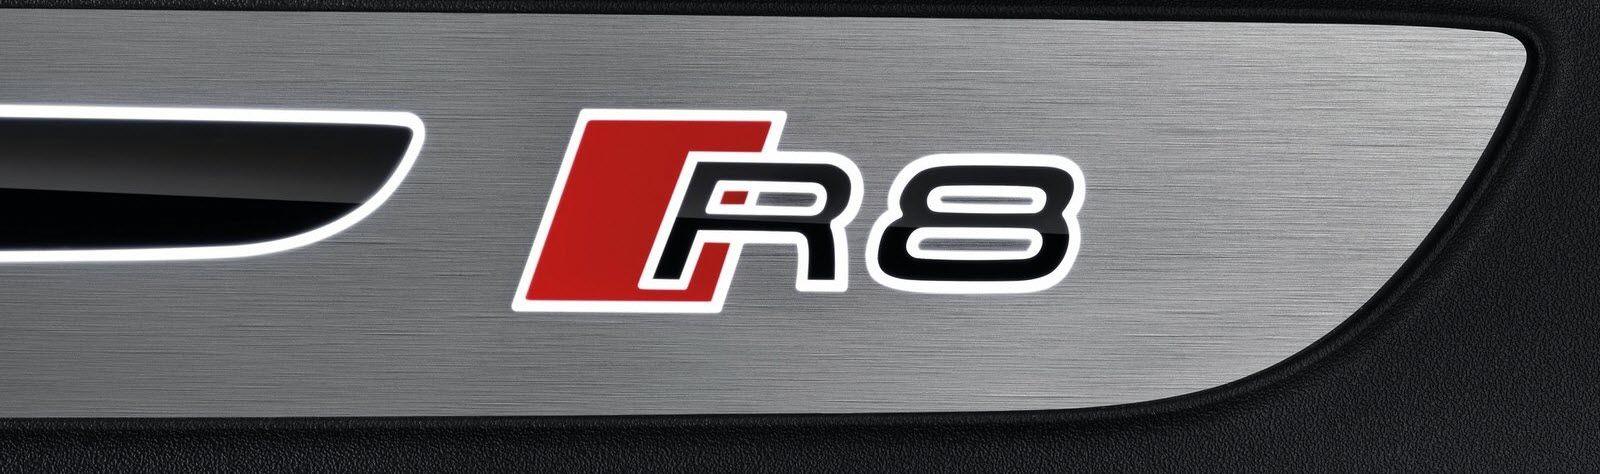 Audi R8 Logo - Hypercarz. Audi R8 V10 Plus Spyder